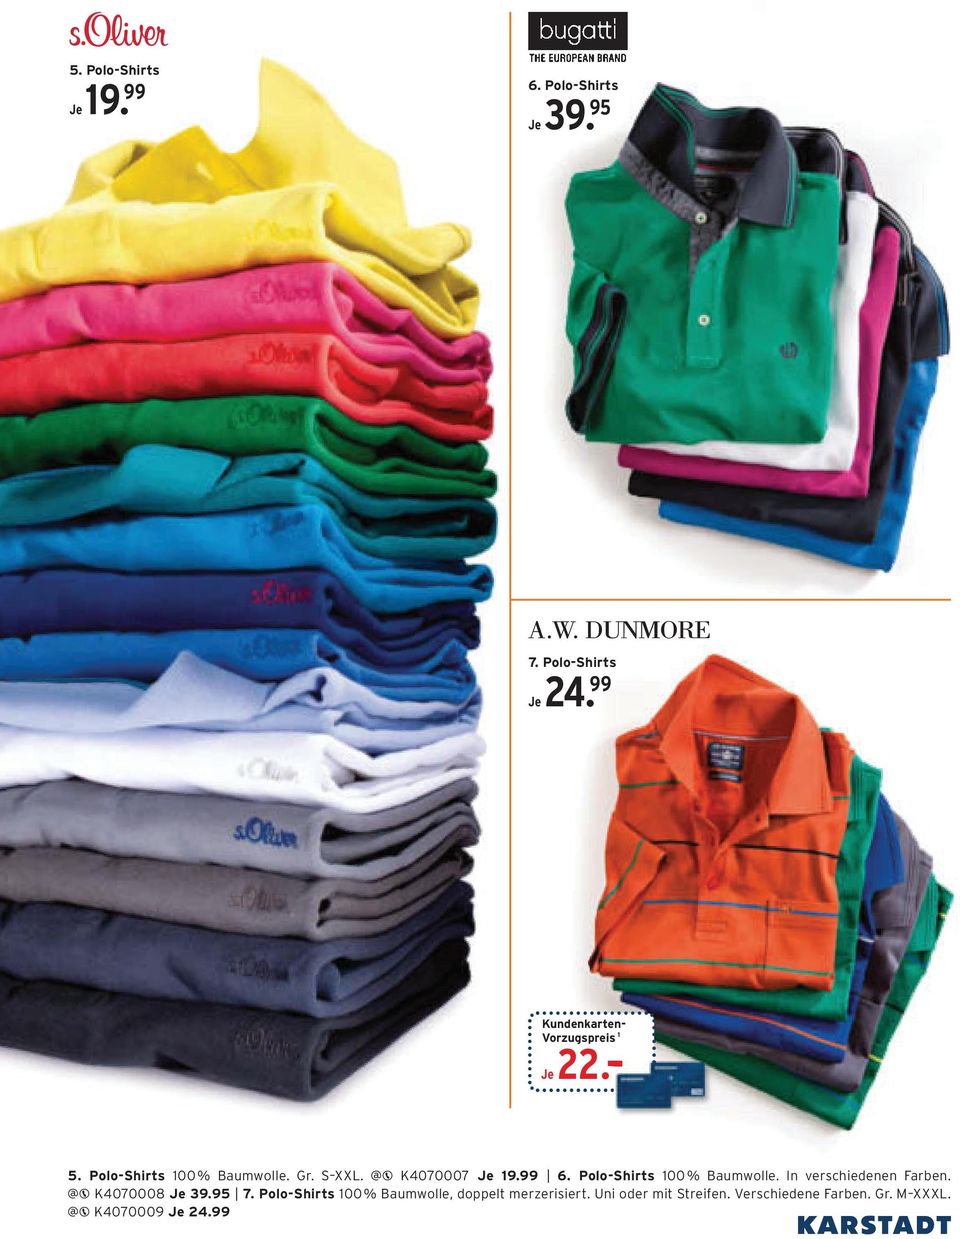 K4070007 Je 9.99 6. Polo-Shirts 00 % Baumwolle. In verschiedenen Farben. K4070008 Je 39.